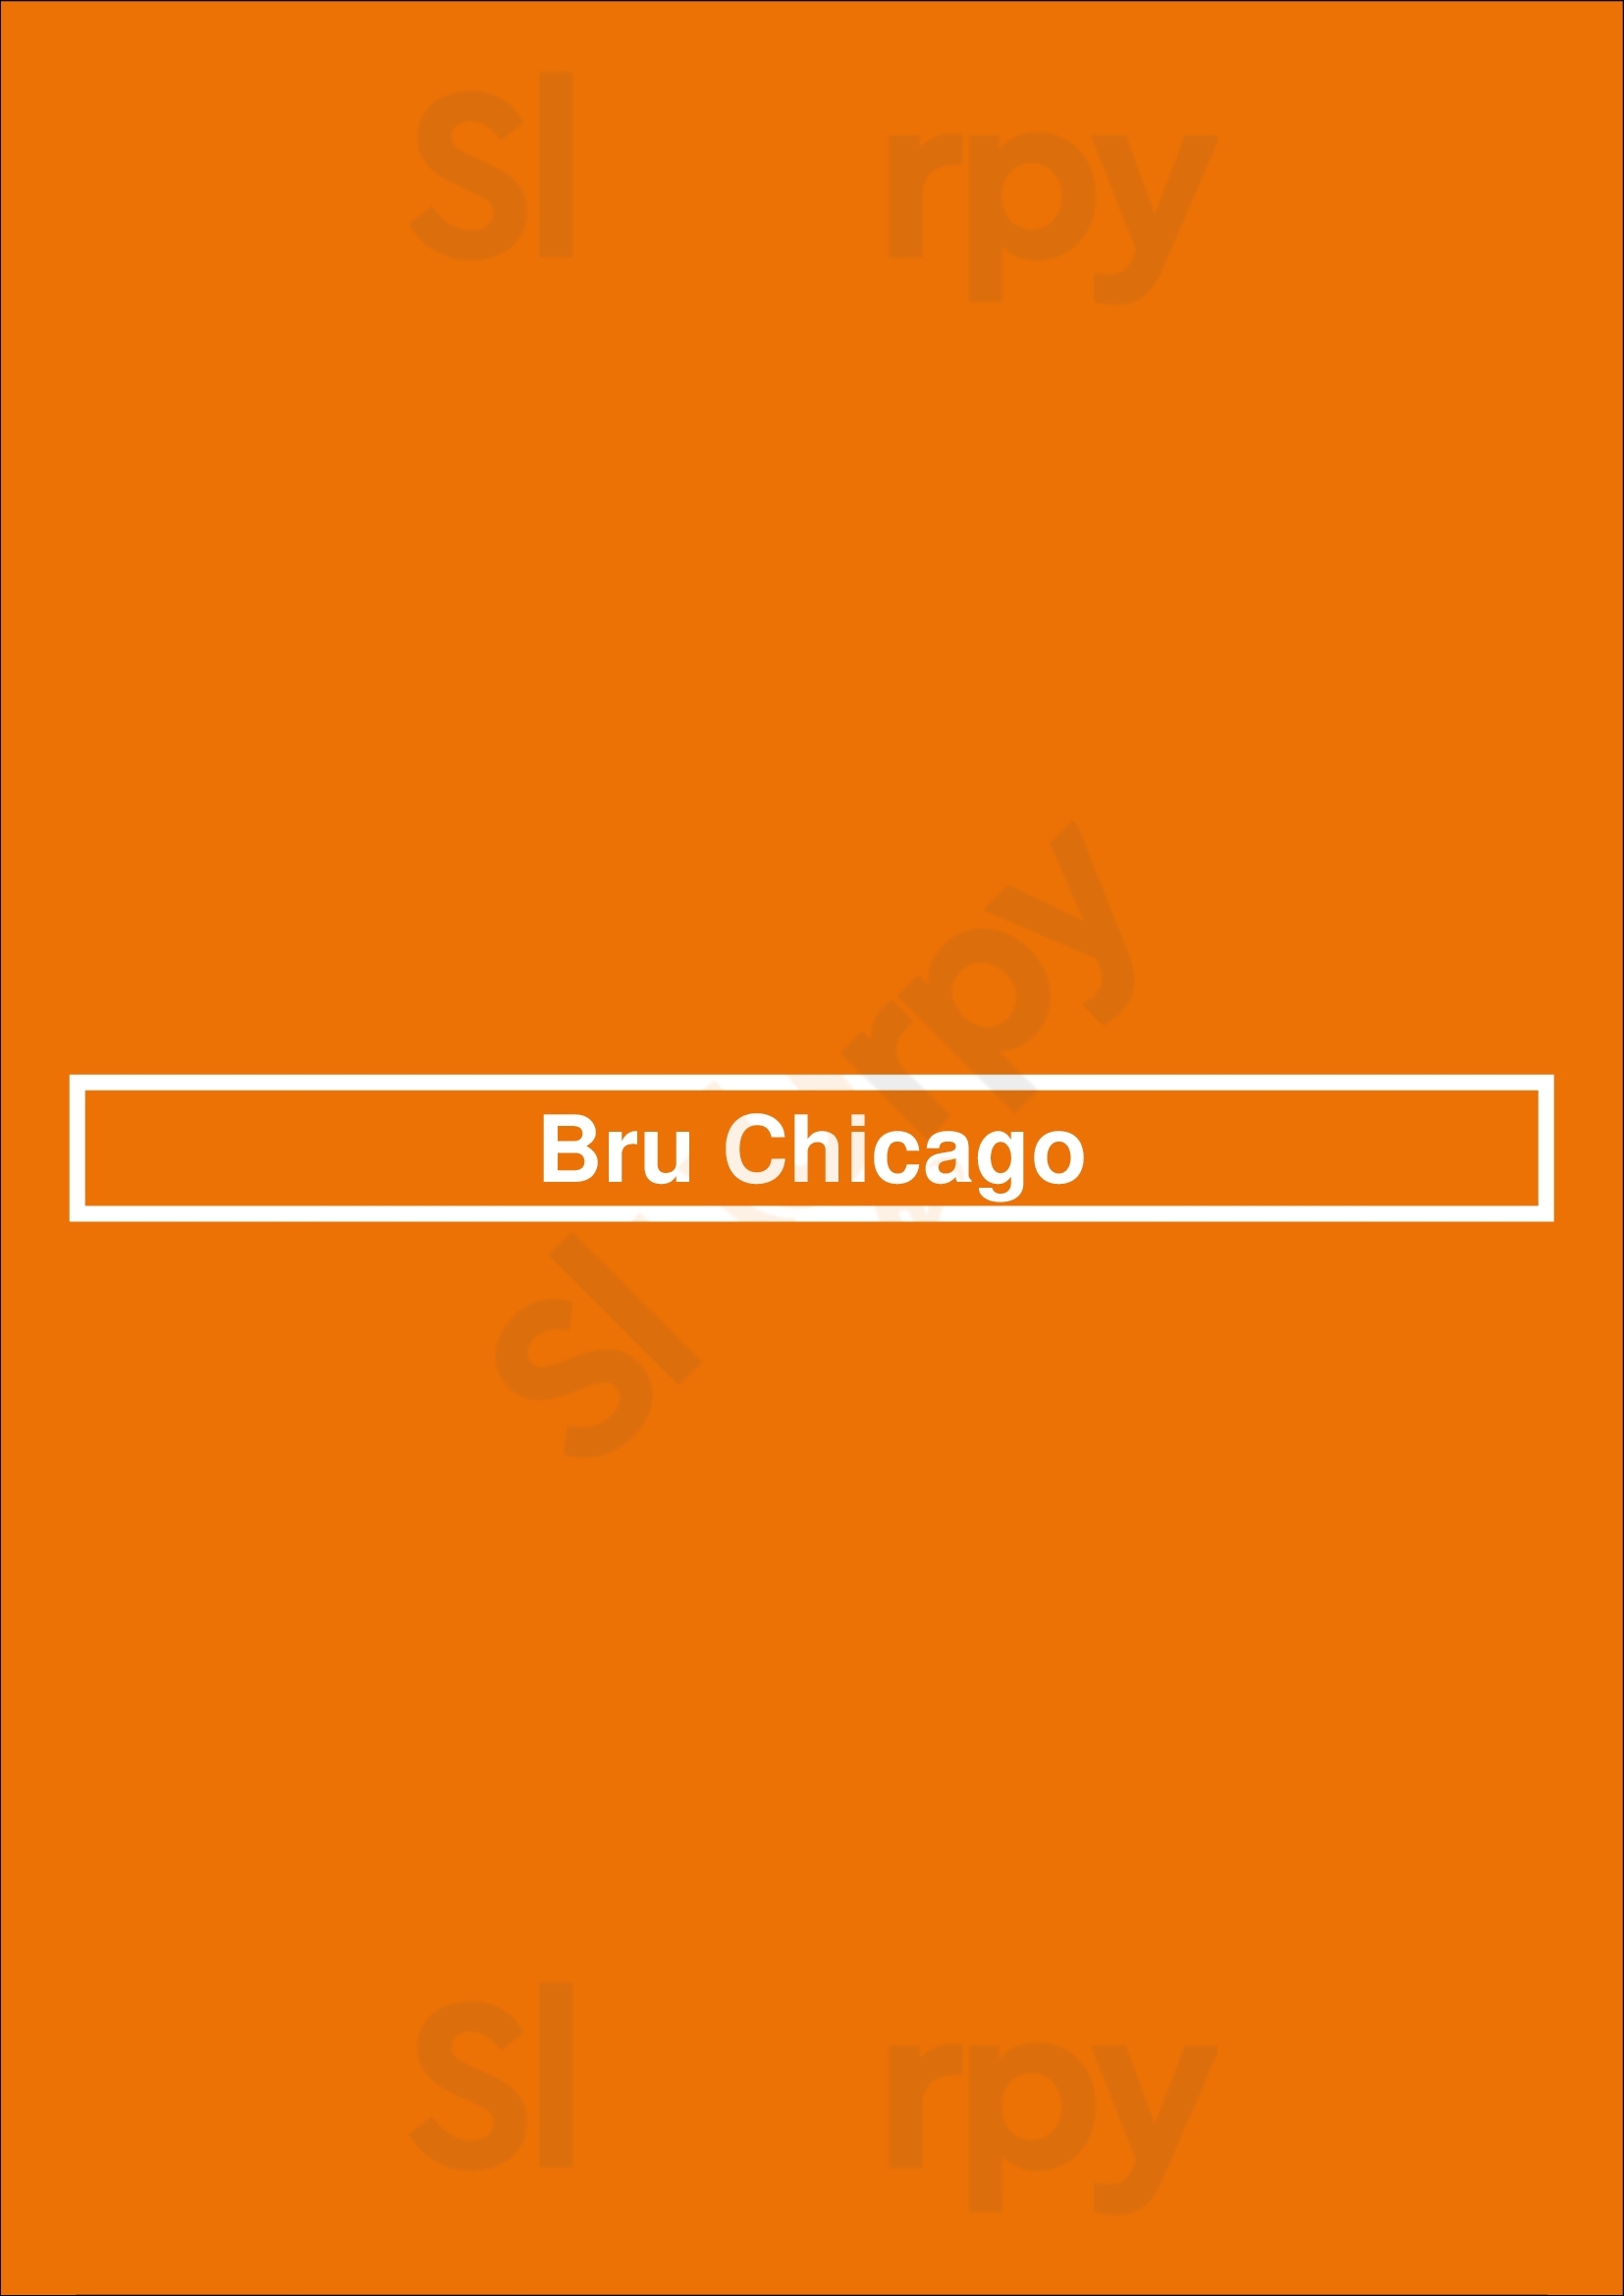 Bru Chicago Chicago Menu - 1